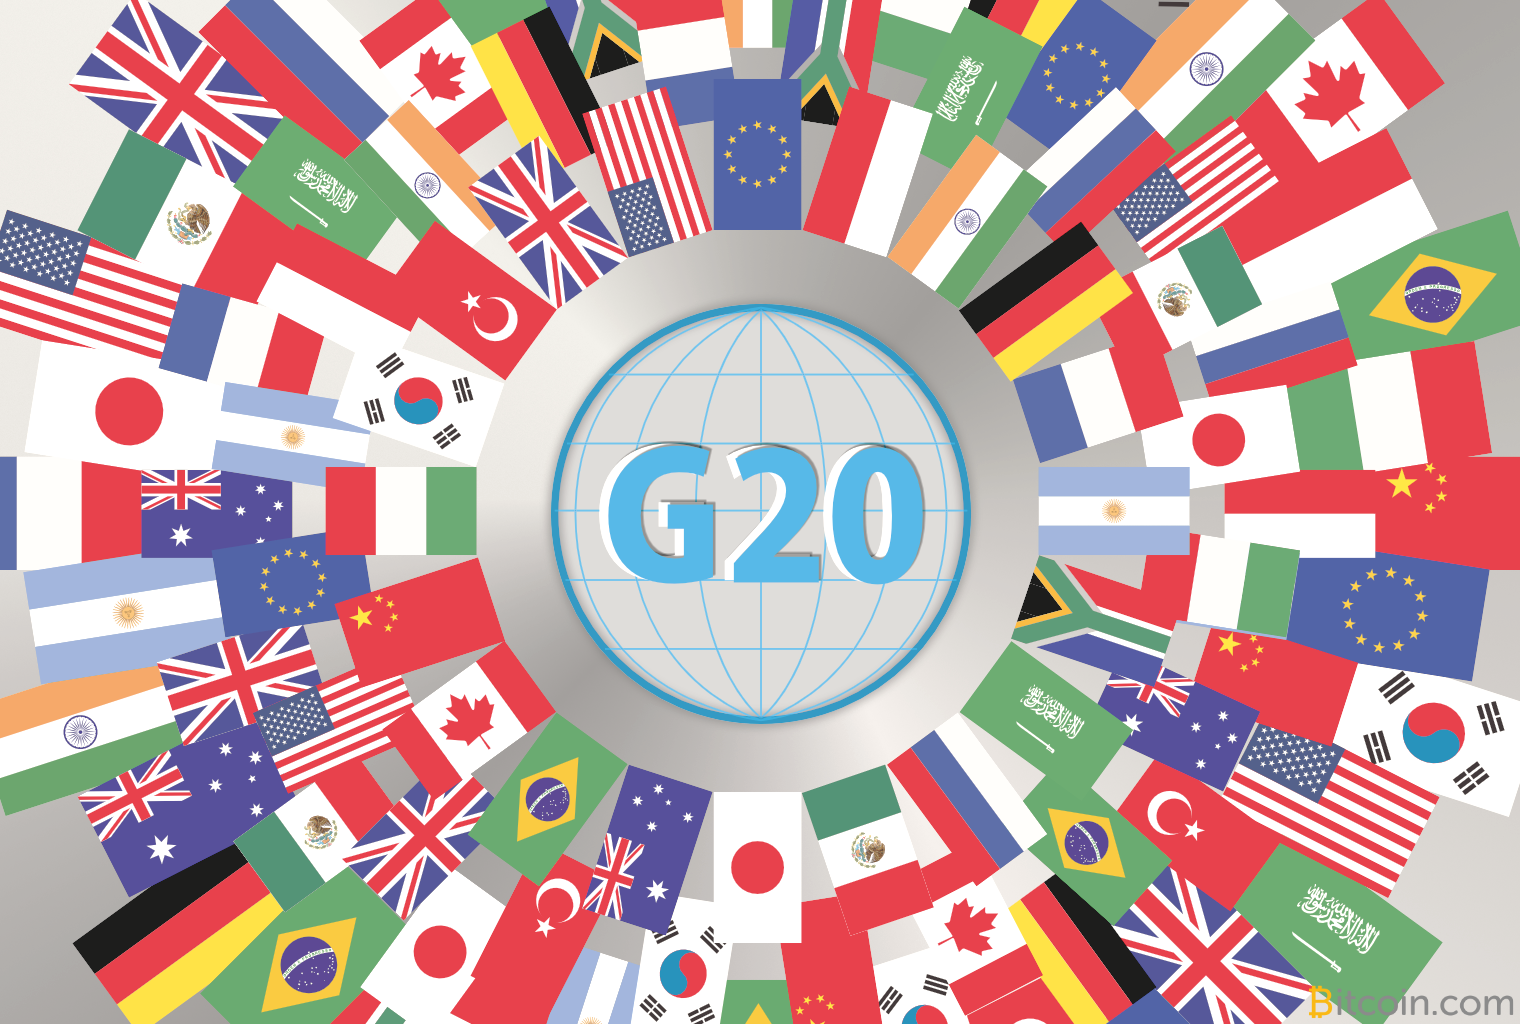 Cryptocurrency regulation g20 g20 presidency rlc crypto news